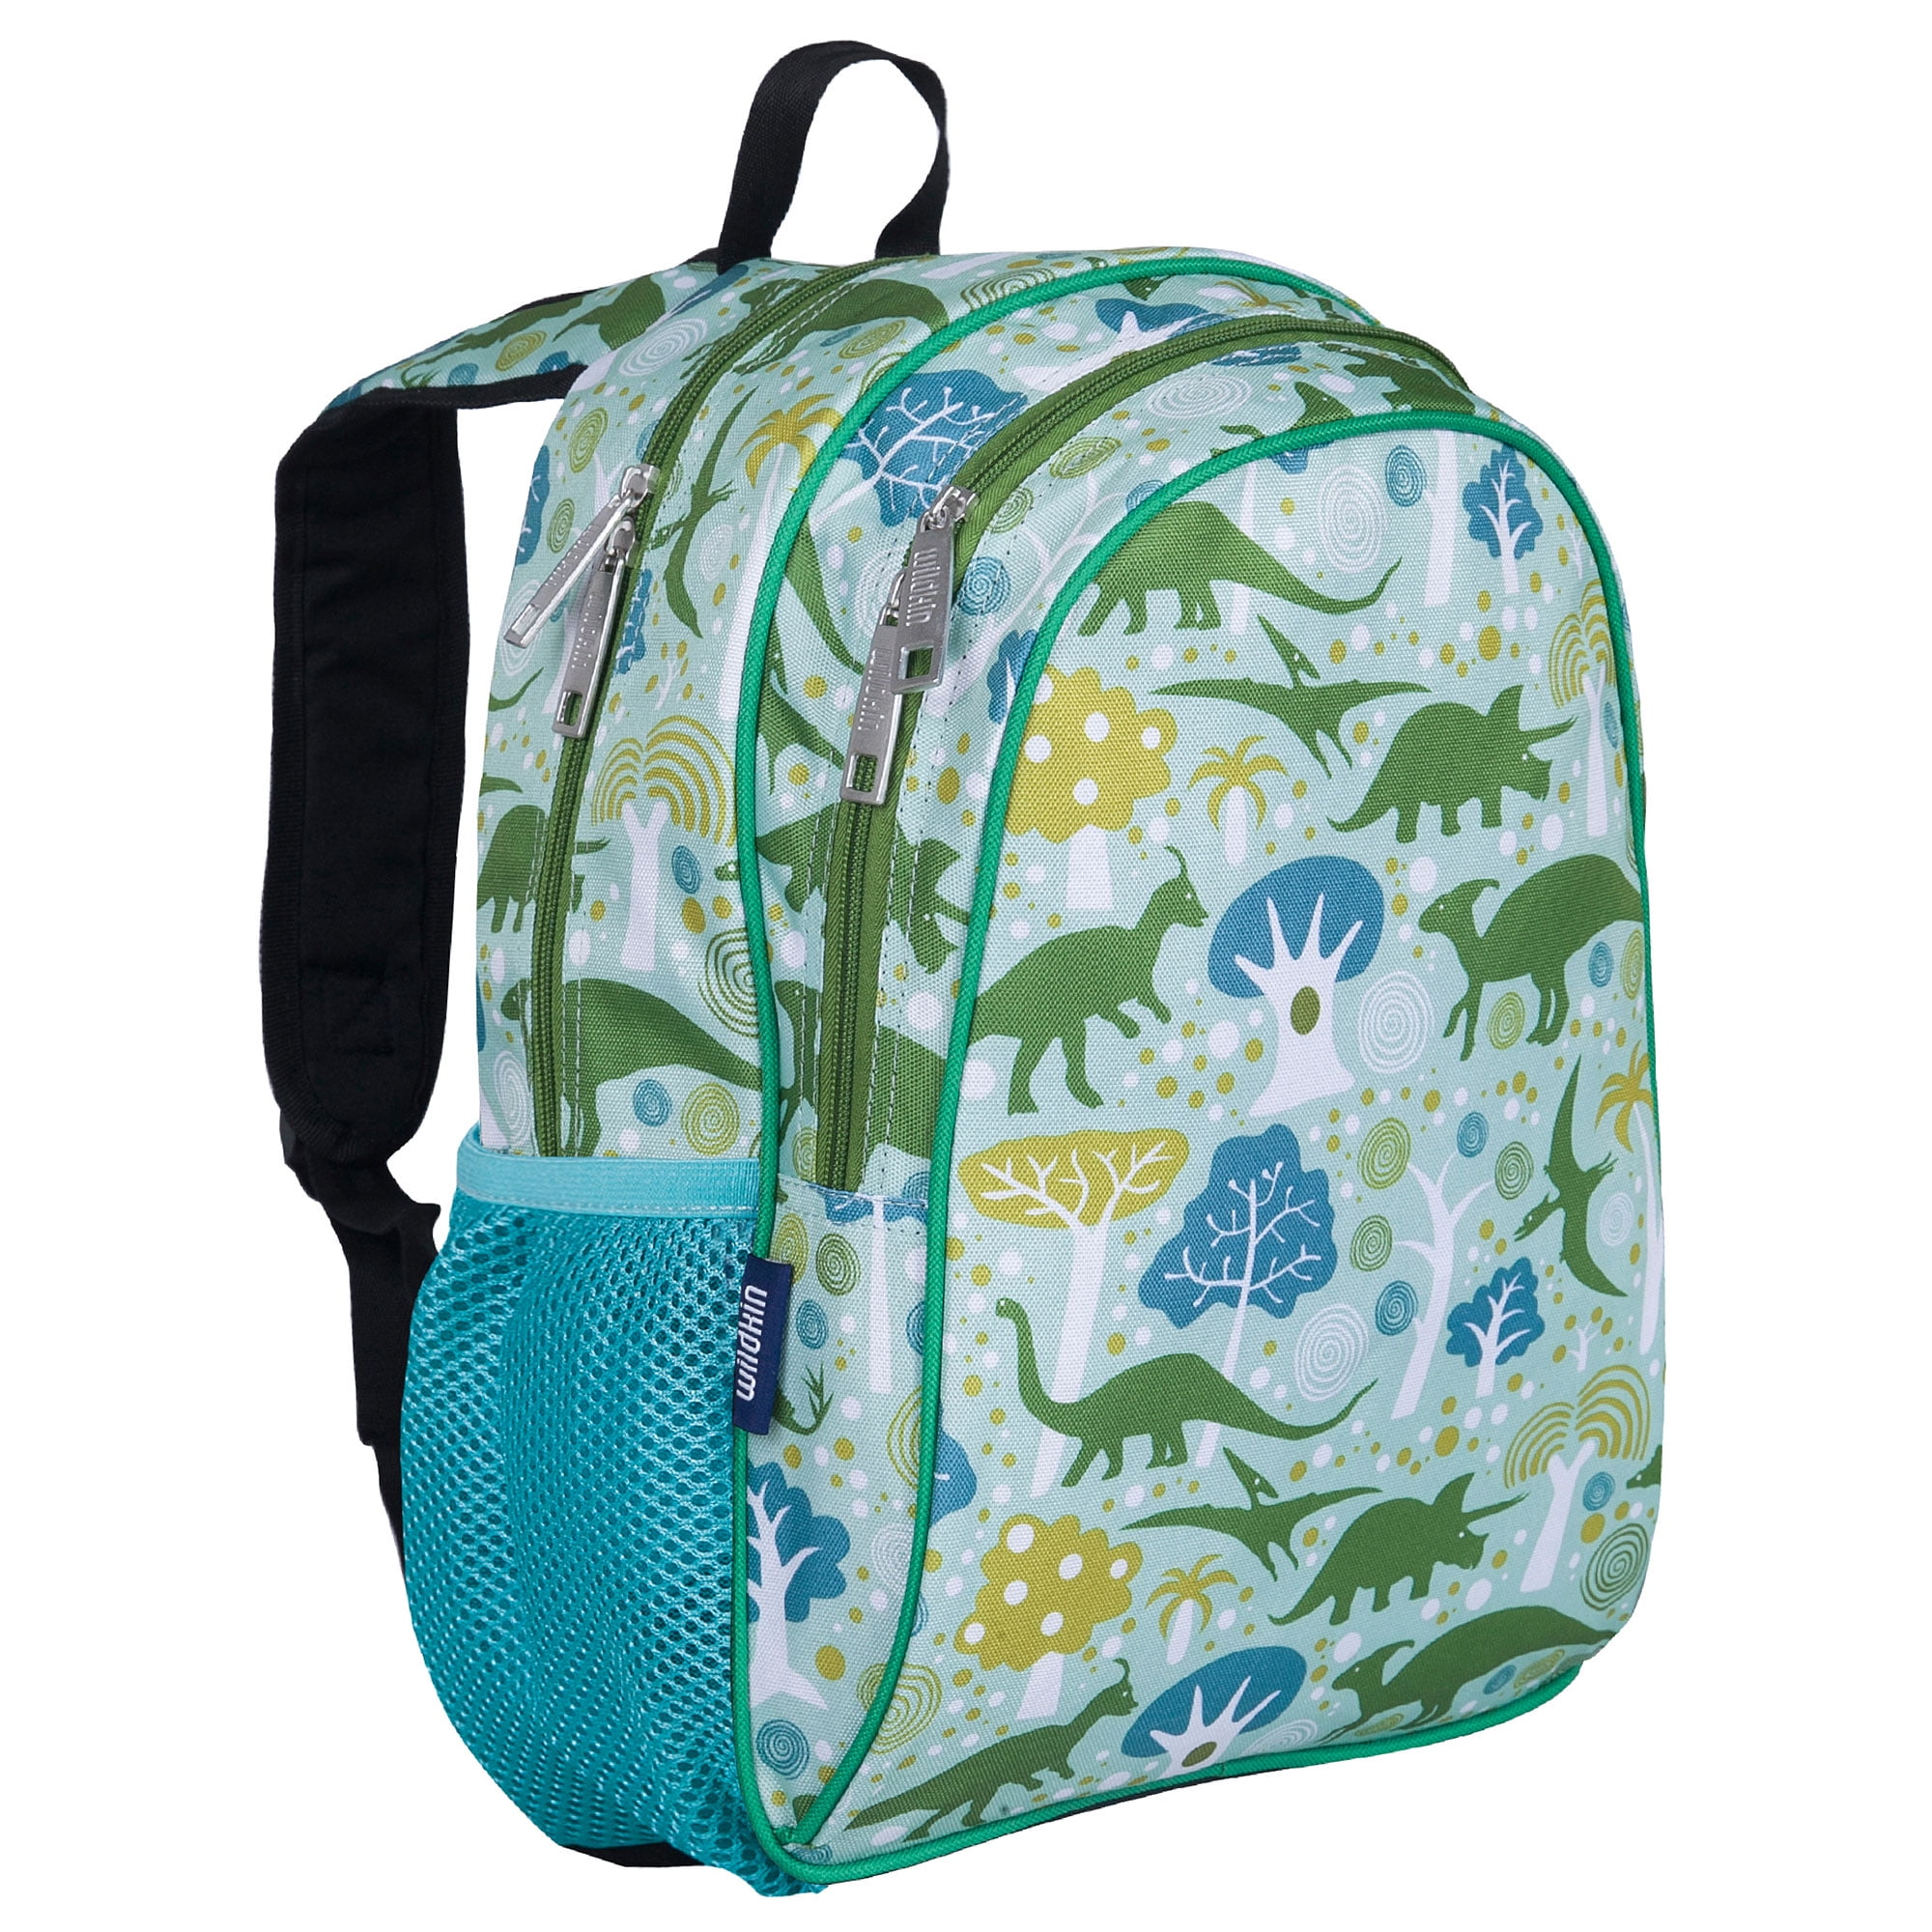 Review: Loopbags Vanguard 15-inch Backpack